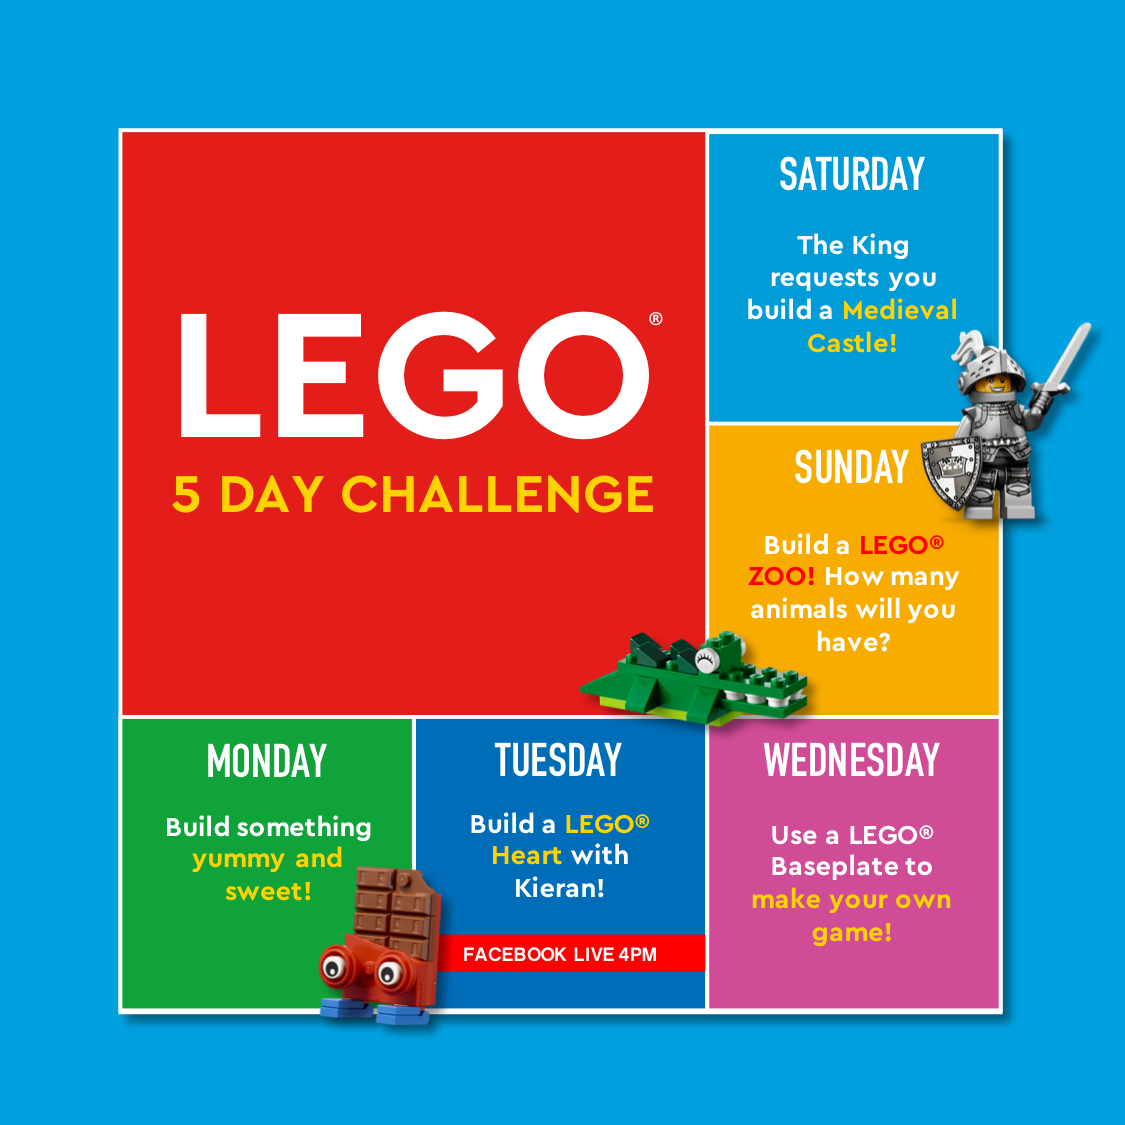 LEGO 5 Day Challenge